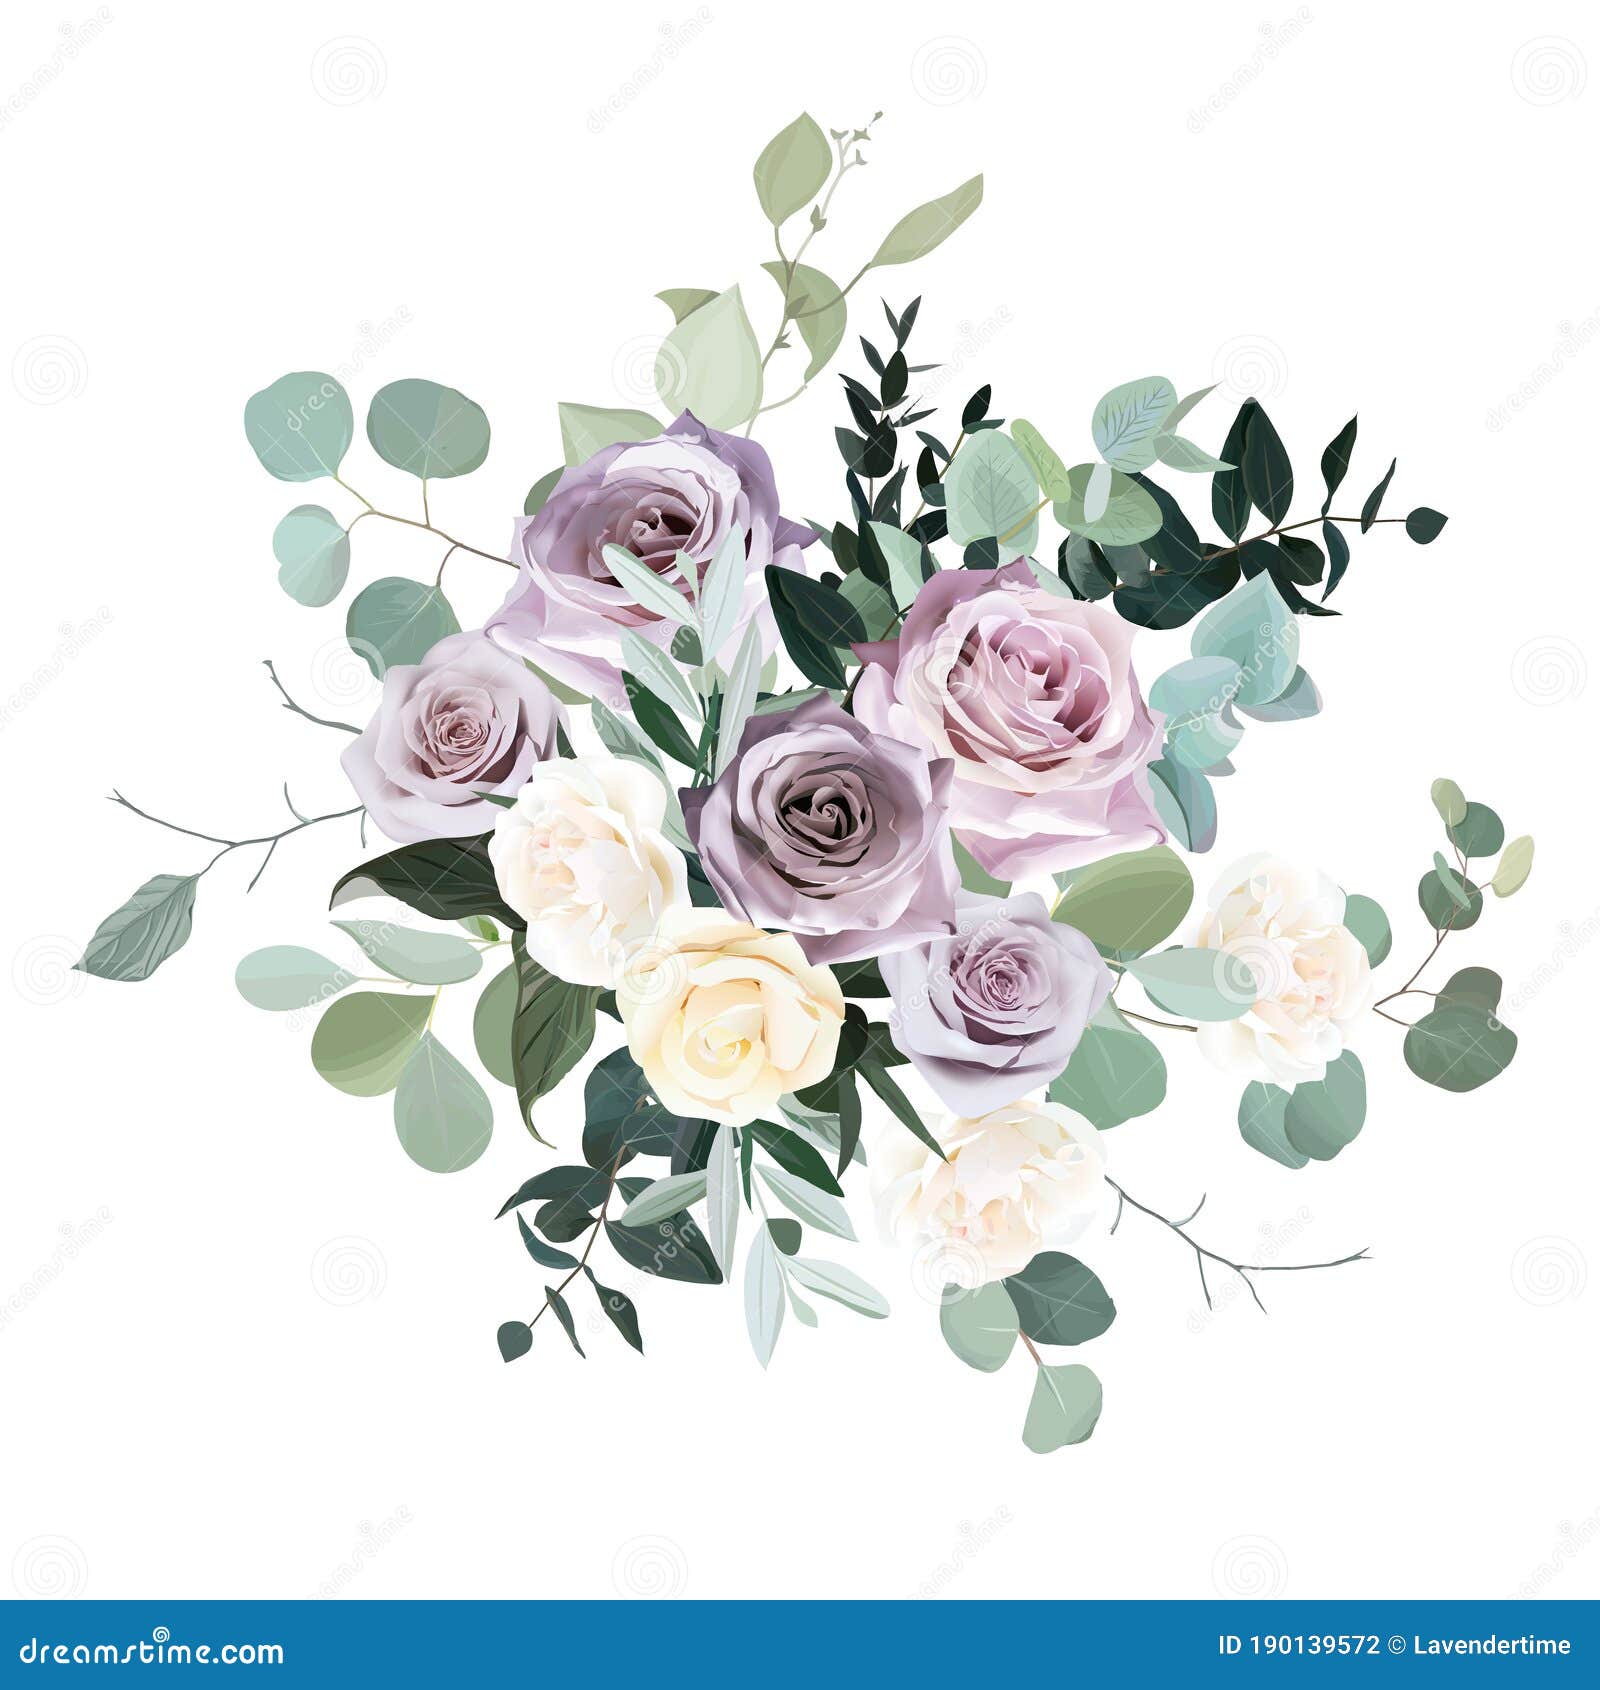 https://thumbs.dreamstime.com/z/dusty-violet-lavender-mauve-antique-rose-purple-pale-ivory-yellow-flowers-vector-design-wedding-bouquet-eucalyptus-greenery-190139572.jpg